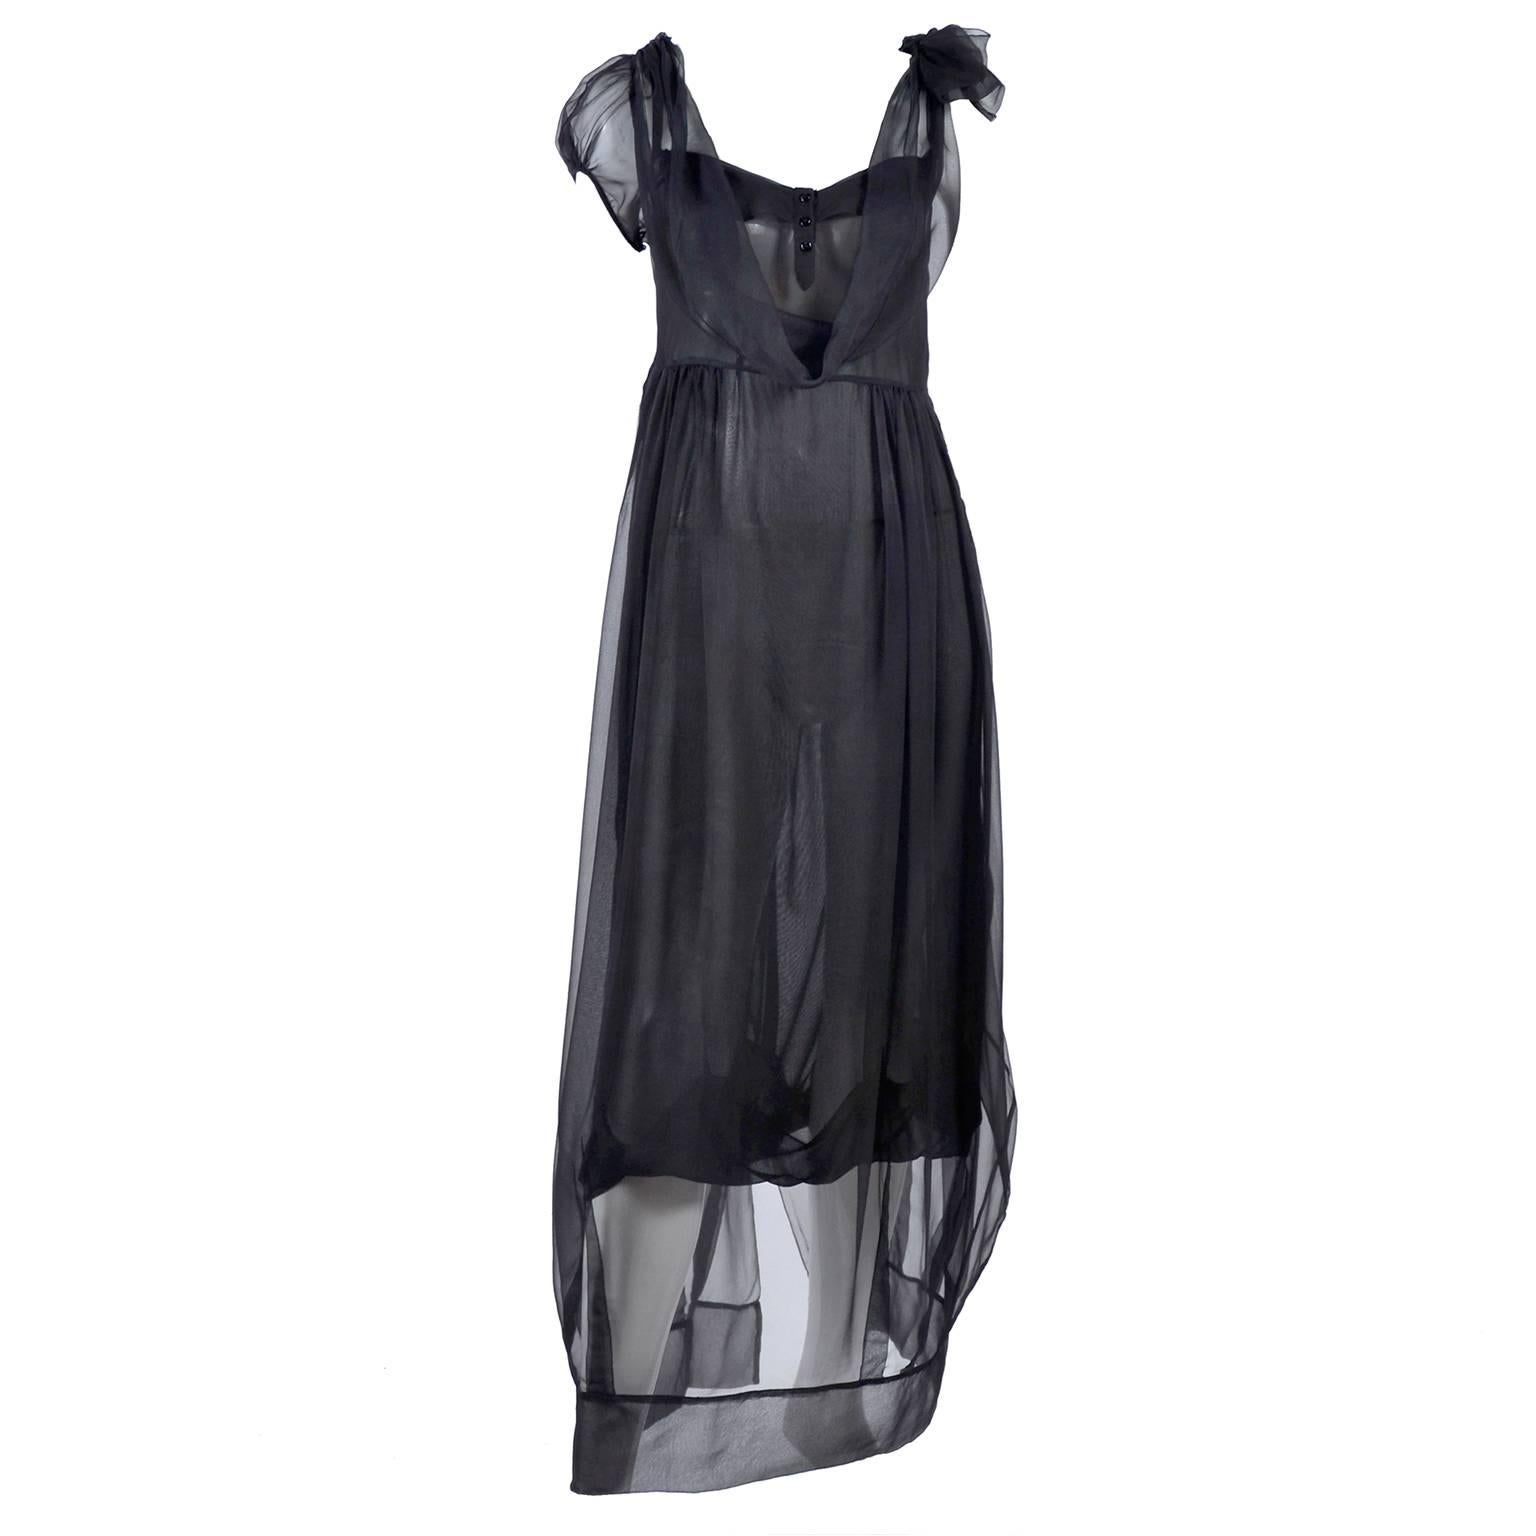 F/W 2006 John Galliano Black Sheer Silk Dress w/ Overlay  Renaissance Inspired (Schwarz)